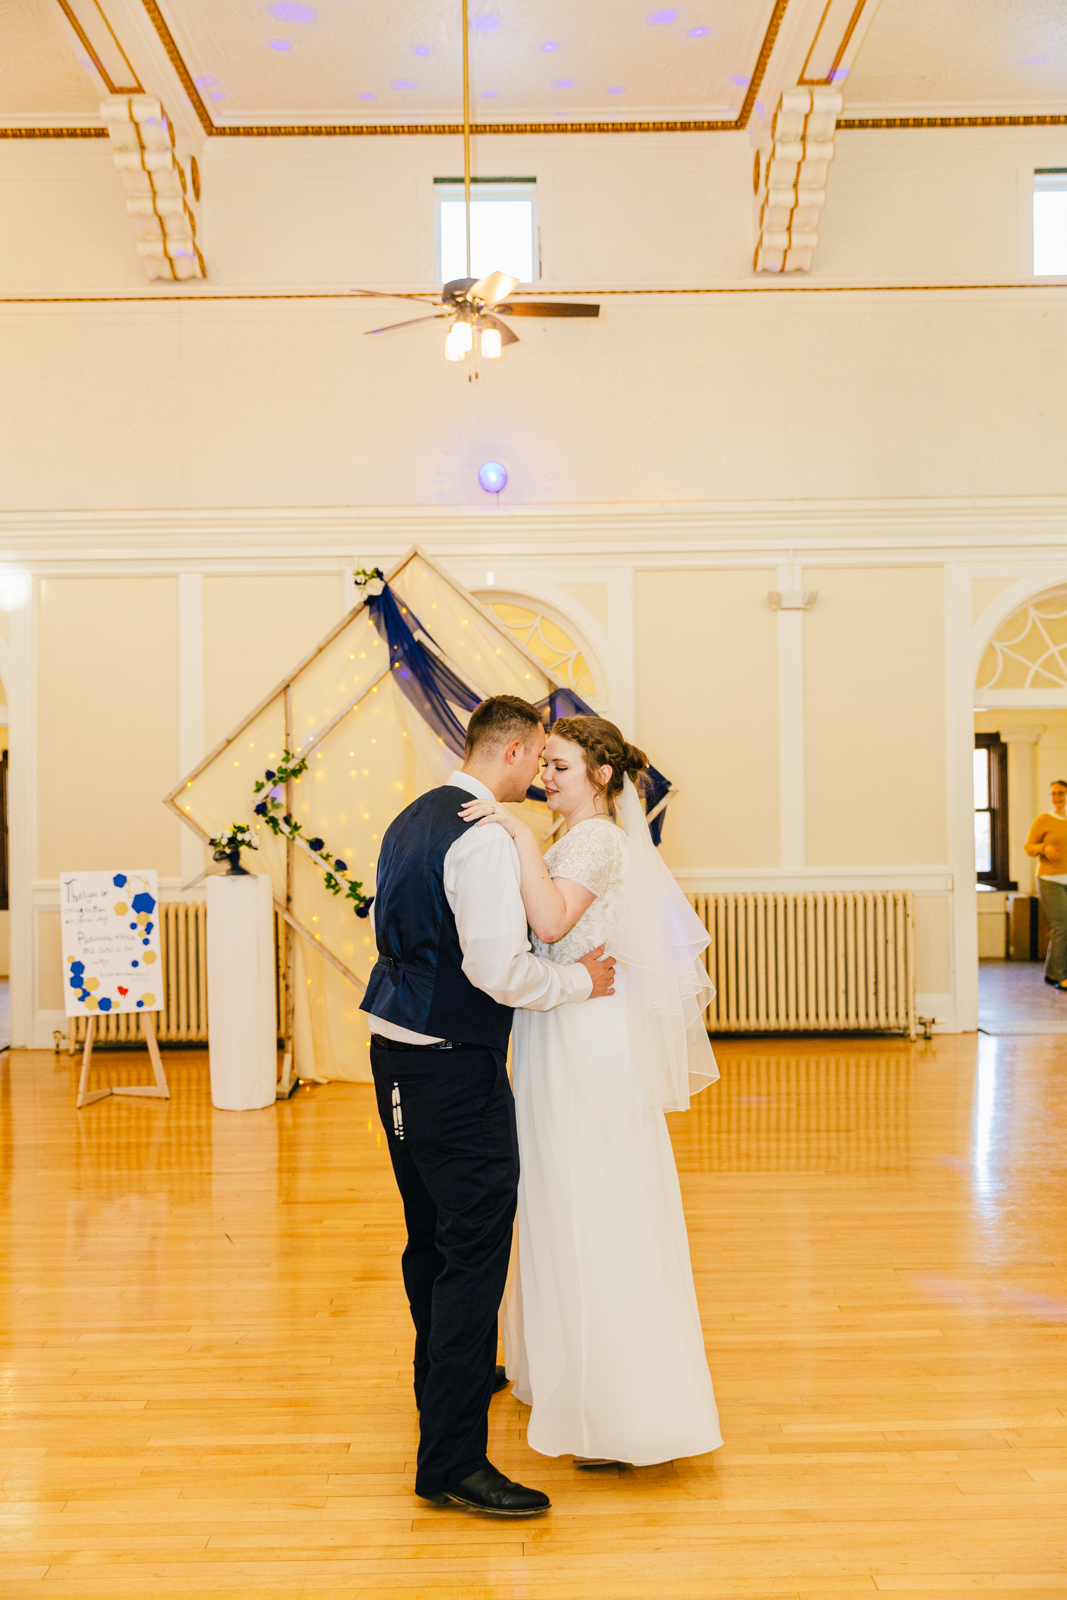 Jackson Hole wedding photographer captures bride and groom dancing at ballroom pocatello wedding venue